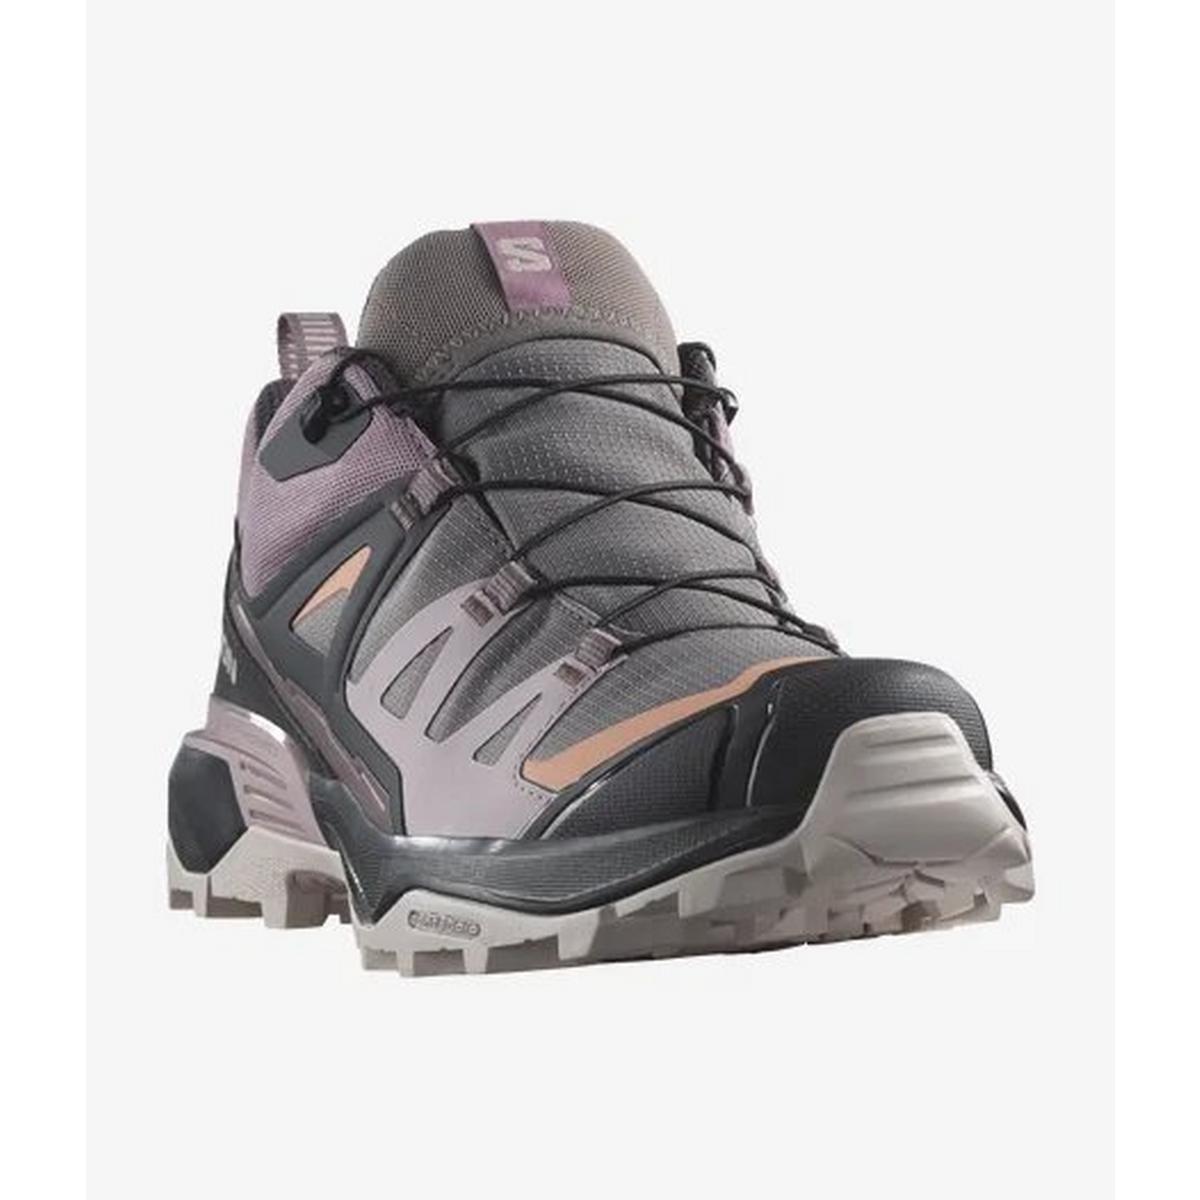 Salomon Women's X Ultra 360 Gore-Tex Hiking Shoes - Black